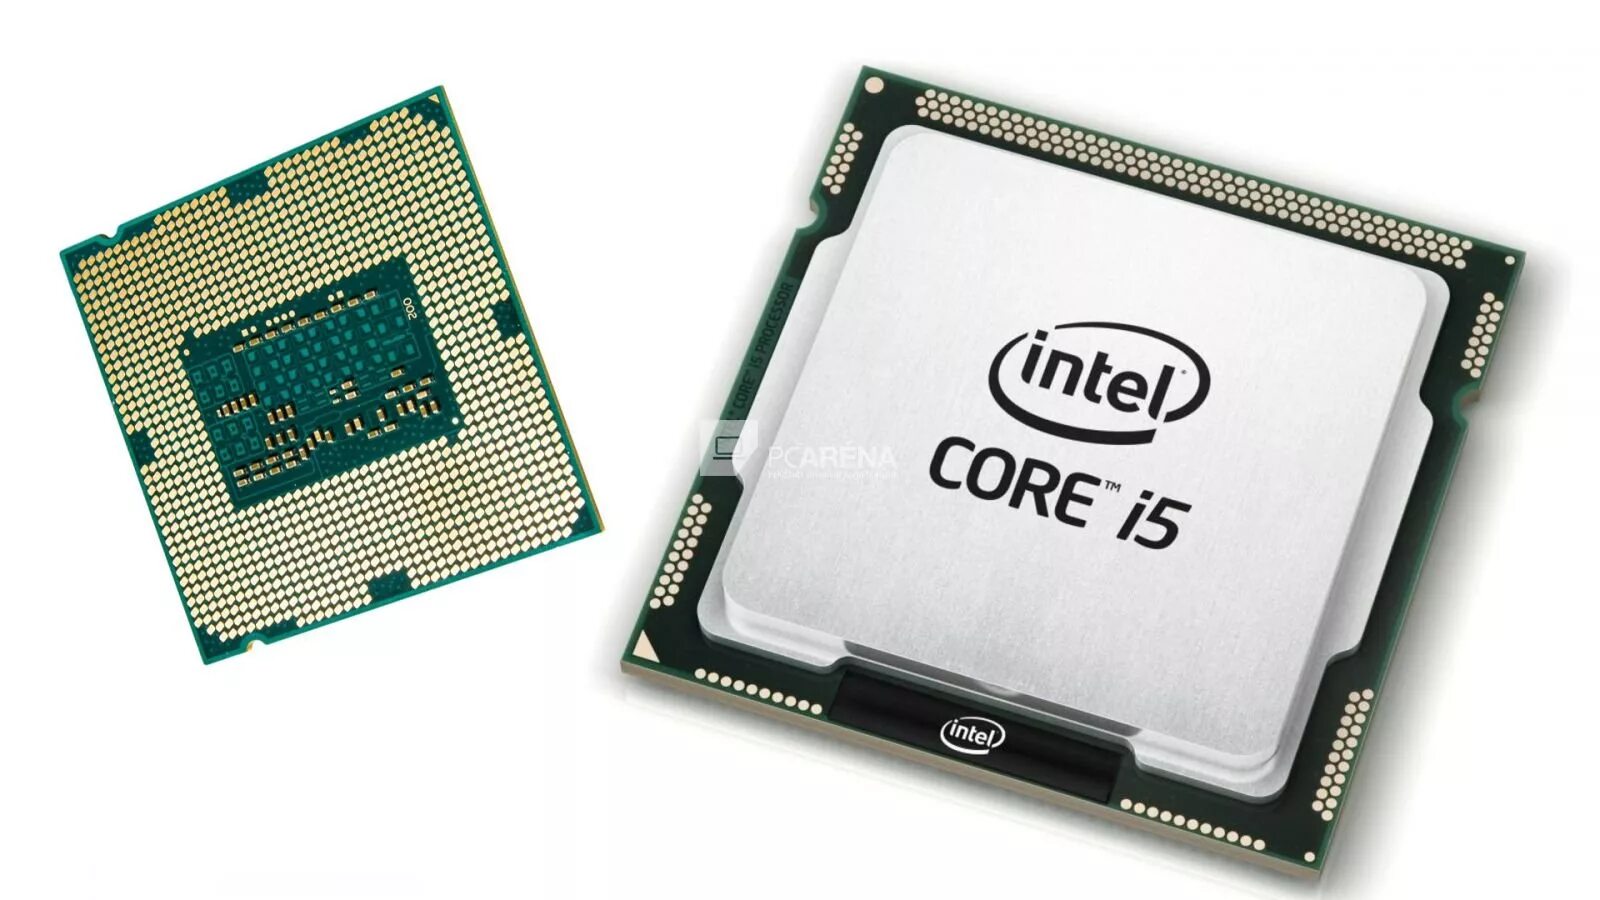 Модель процессора i5. Процессор Intel Core i5 2400. Процессор Intel Core i5 inside. Intel Core i5 2400 сокет. Процессор Intel Core i5 5500.